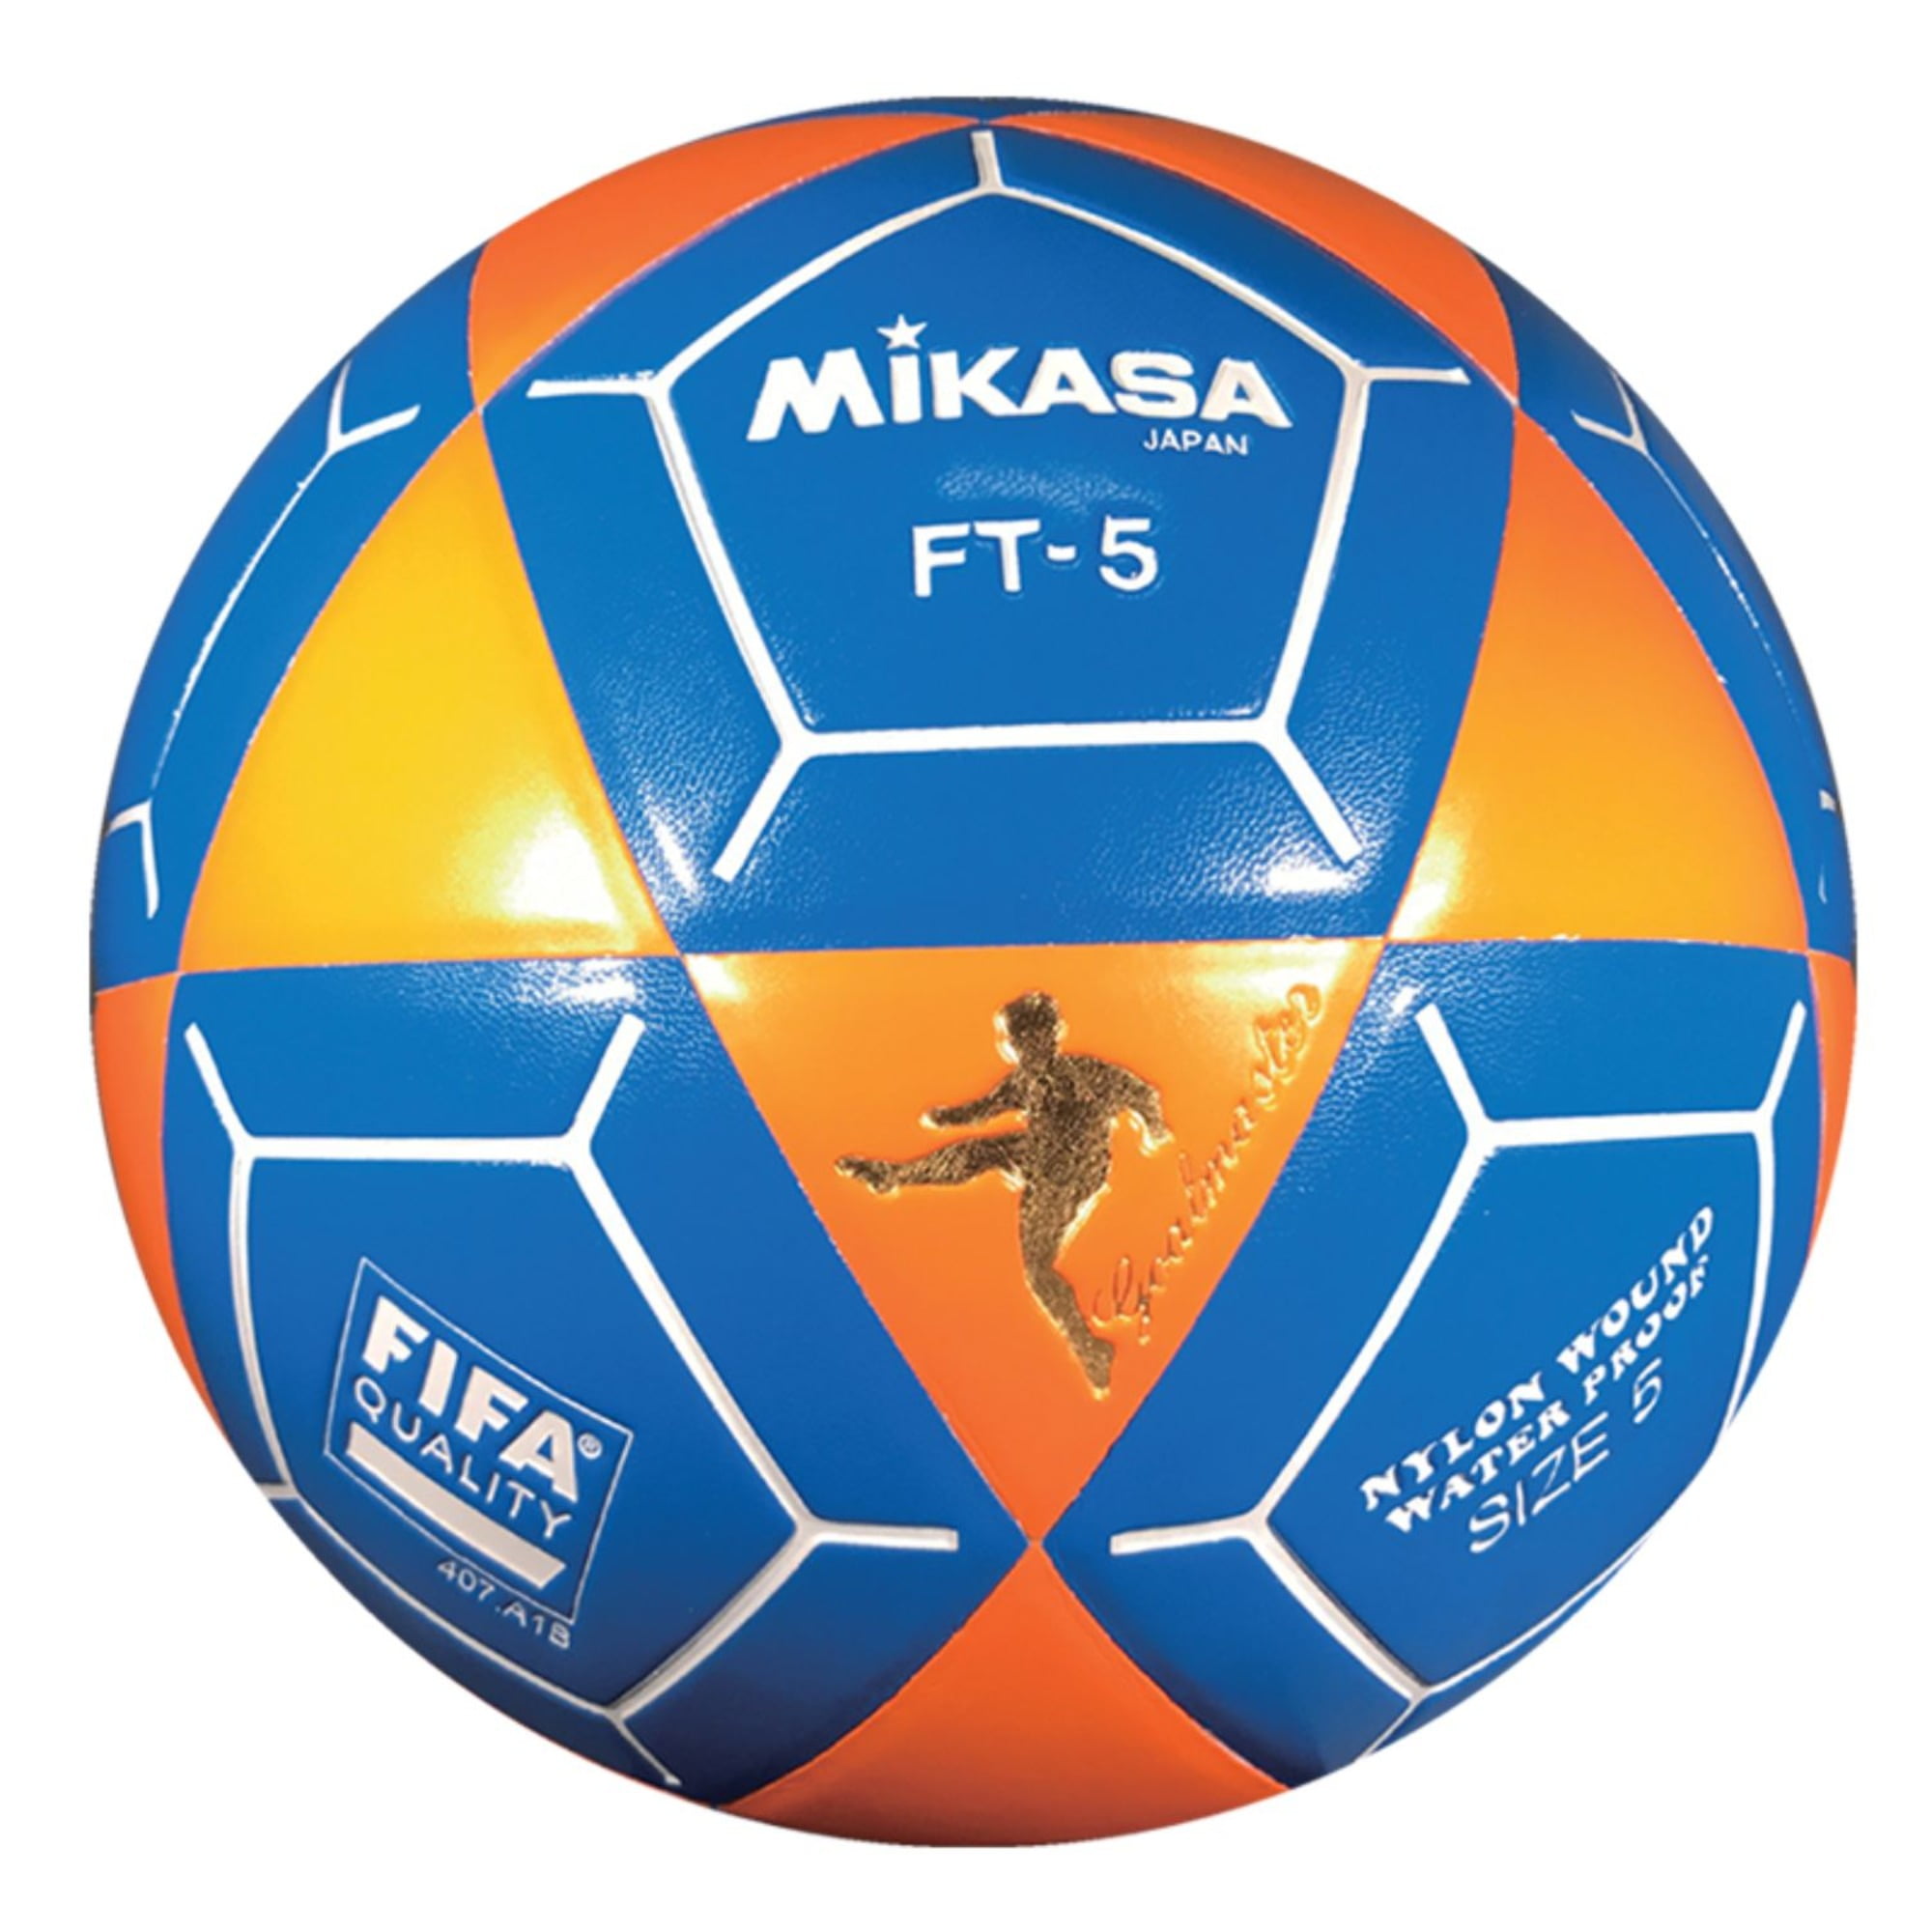 Mikasa FT5 Goal Master Soccer Ball Size 5 Orange/Blue Official Footvolley Ball